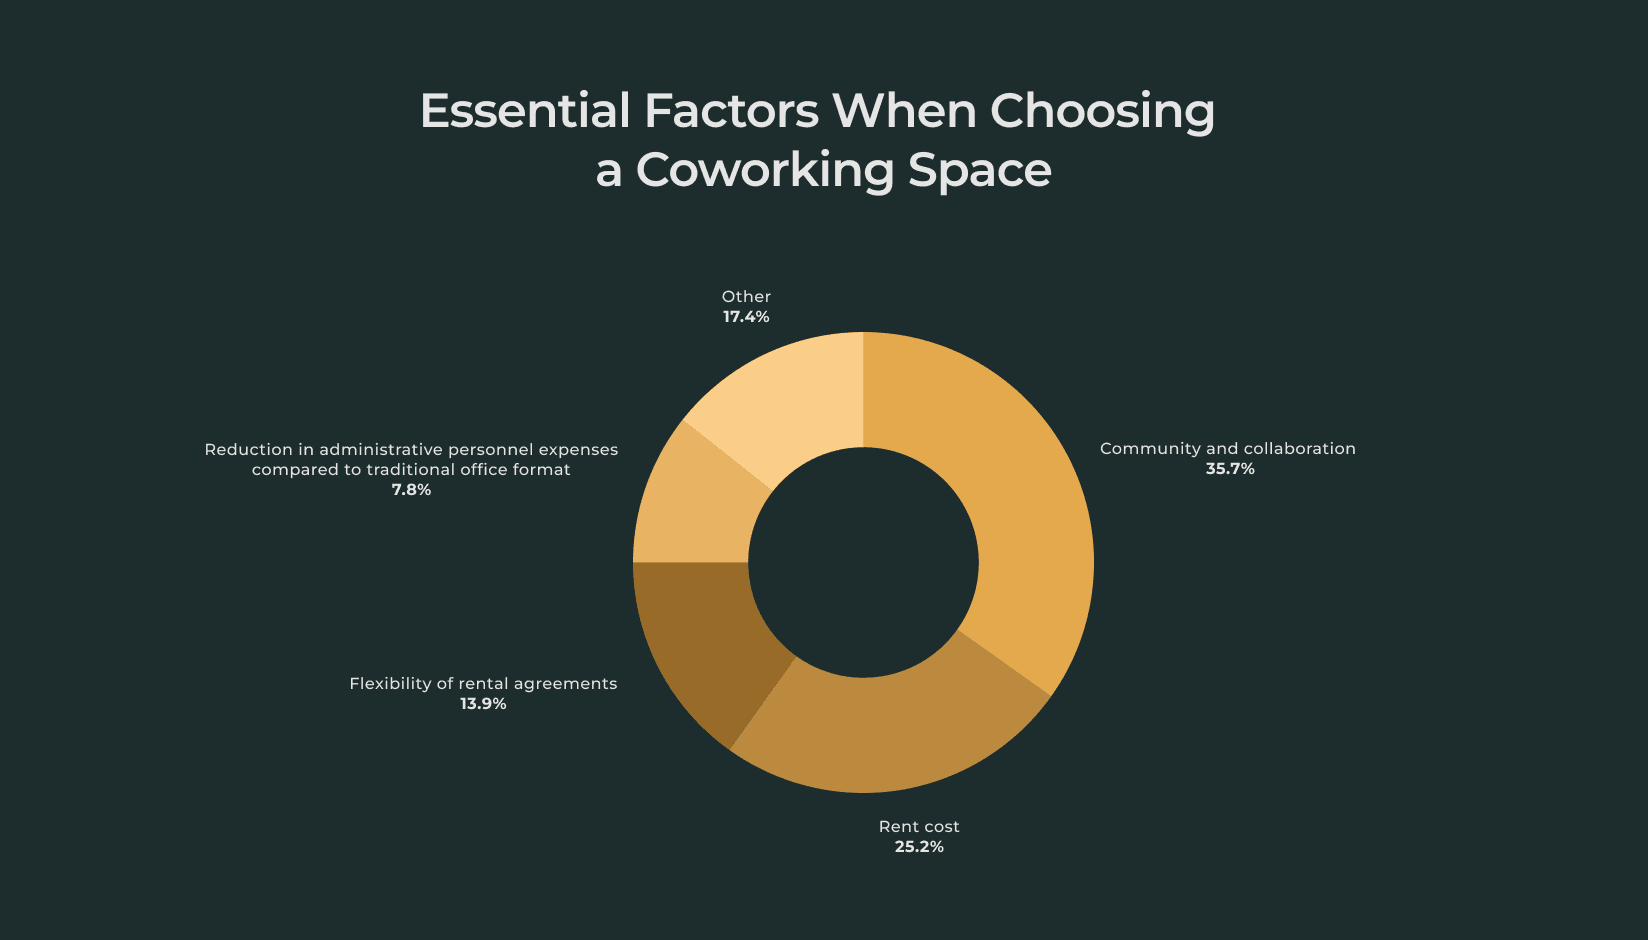 Essential factors when choosing a coworking space - Spacebring survey